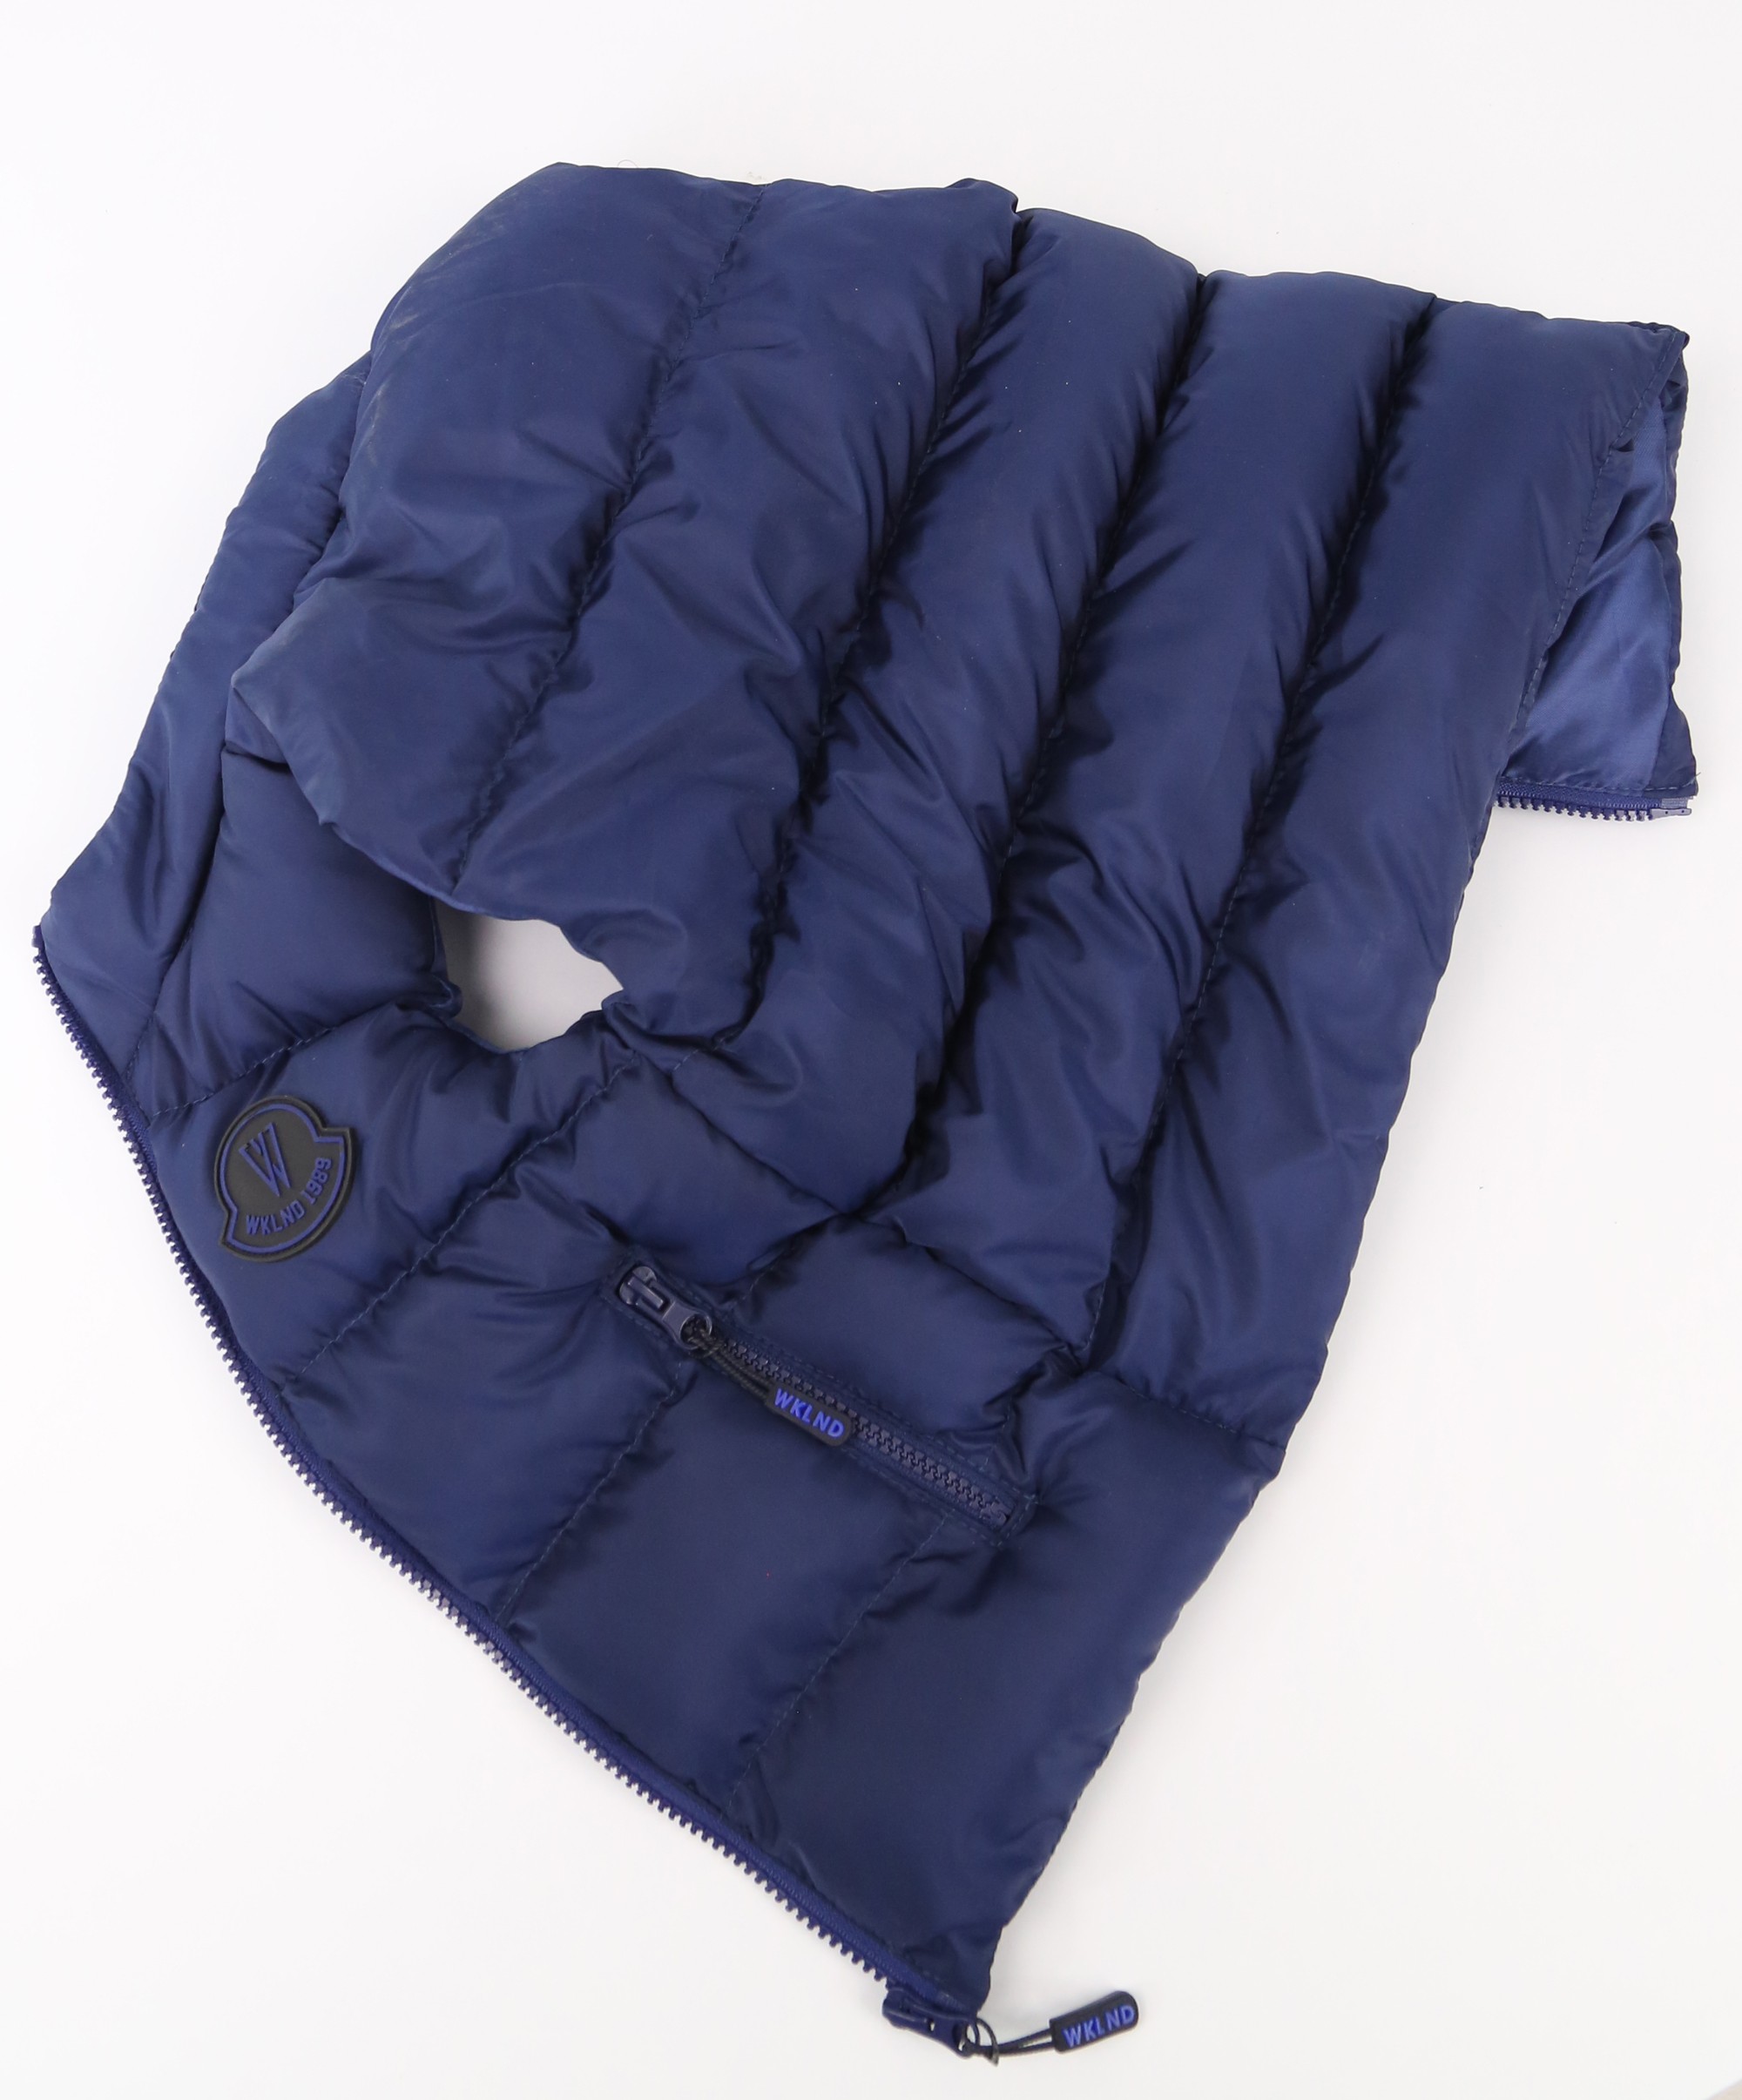 Boys Puffer Vest, Kids Padded Sleeveless Winter Outerwear - Navy Blue